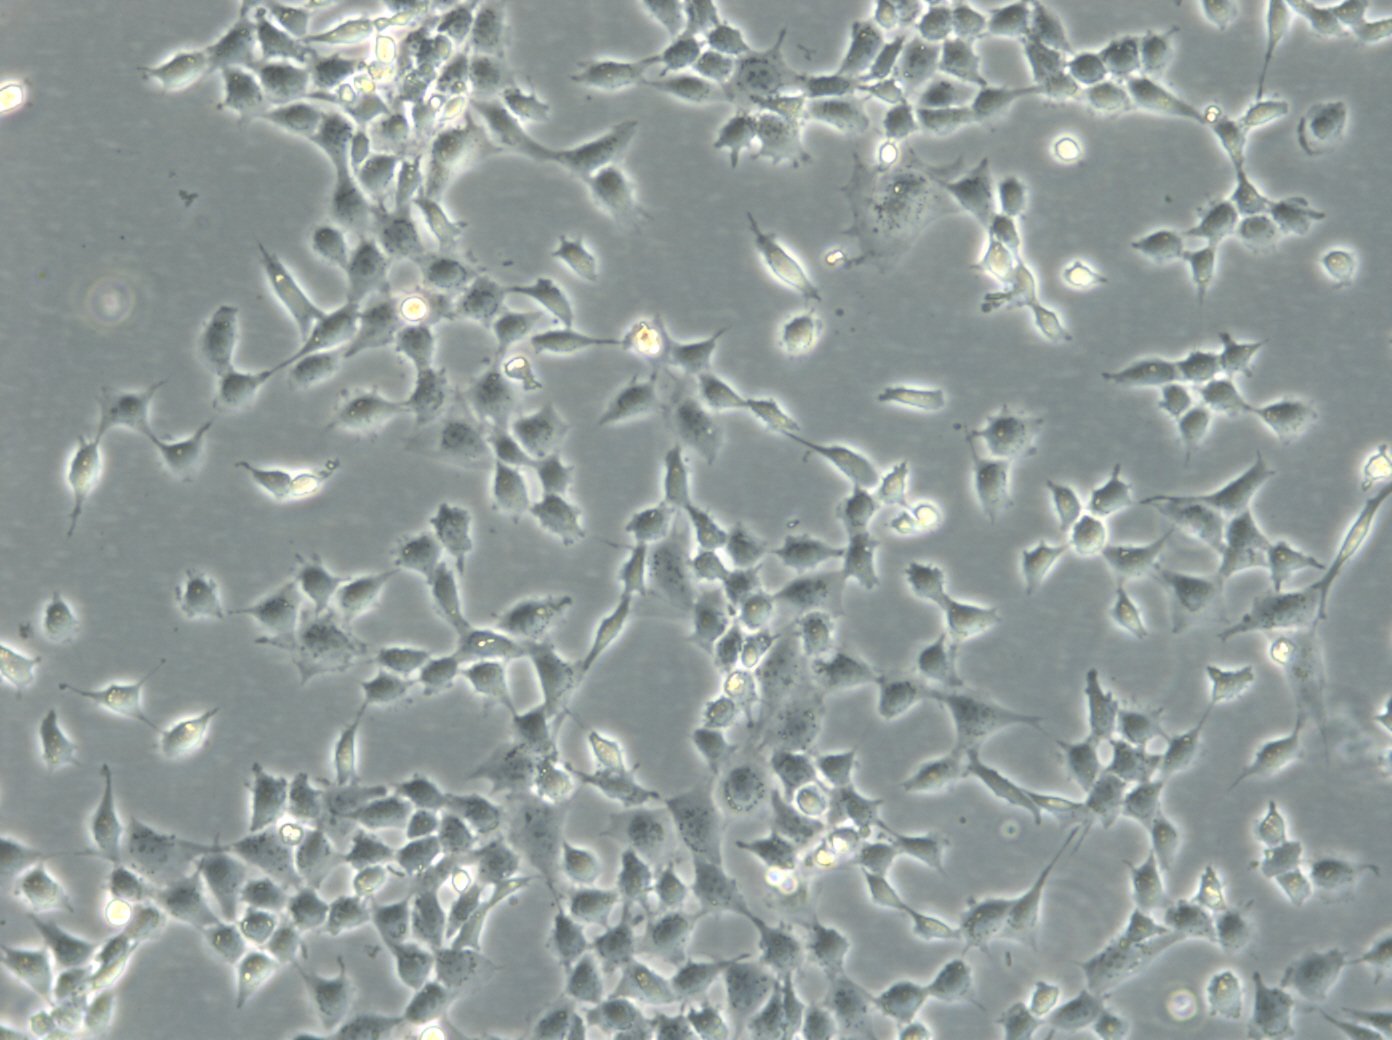 3T6-Swiss albino Cells